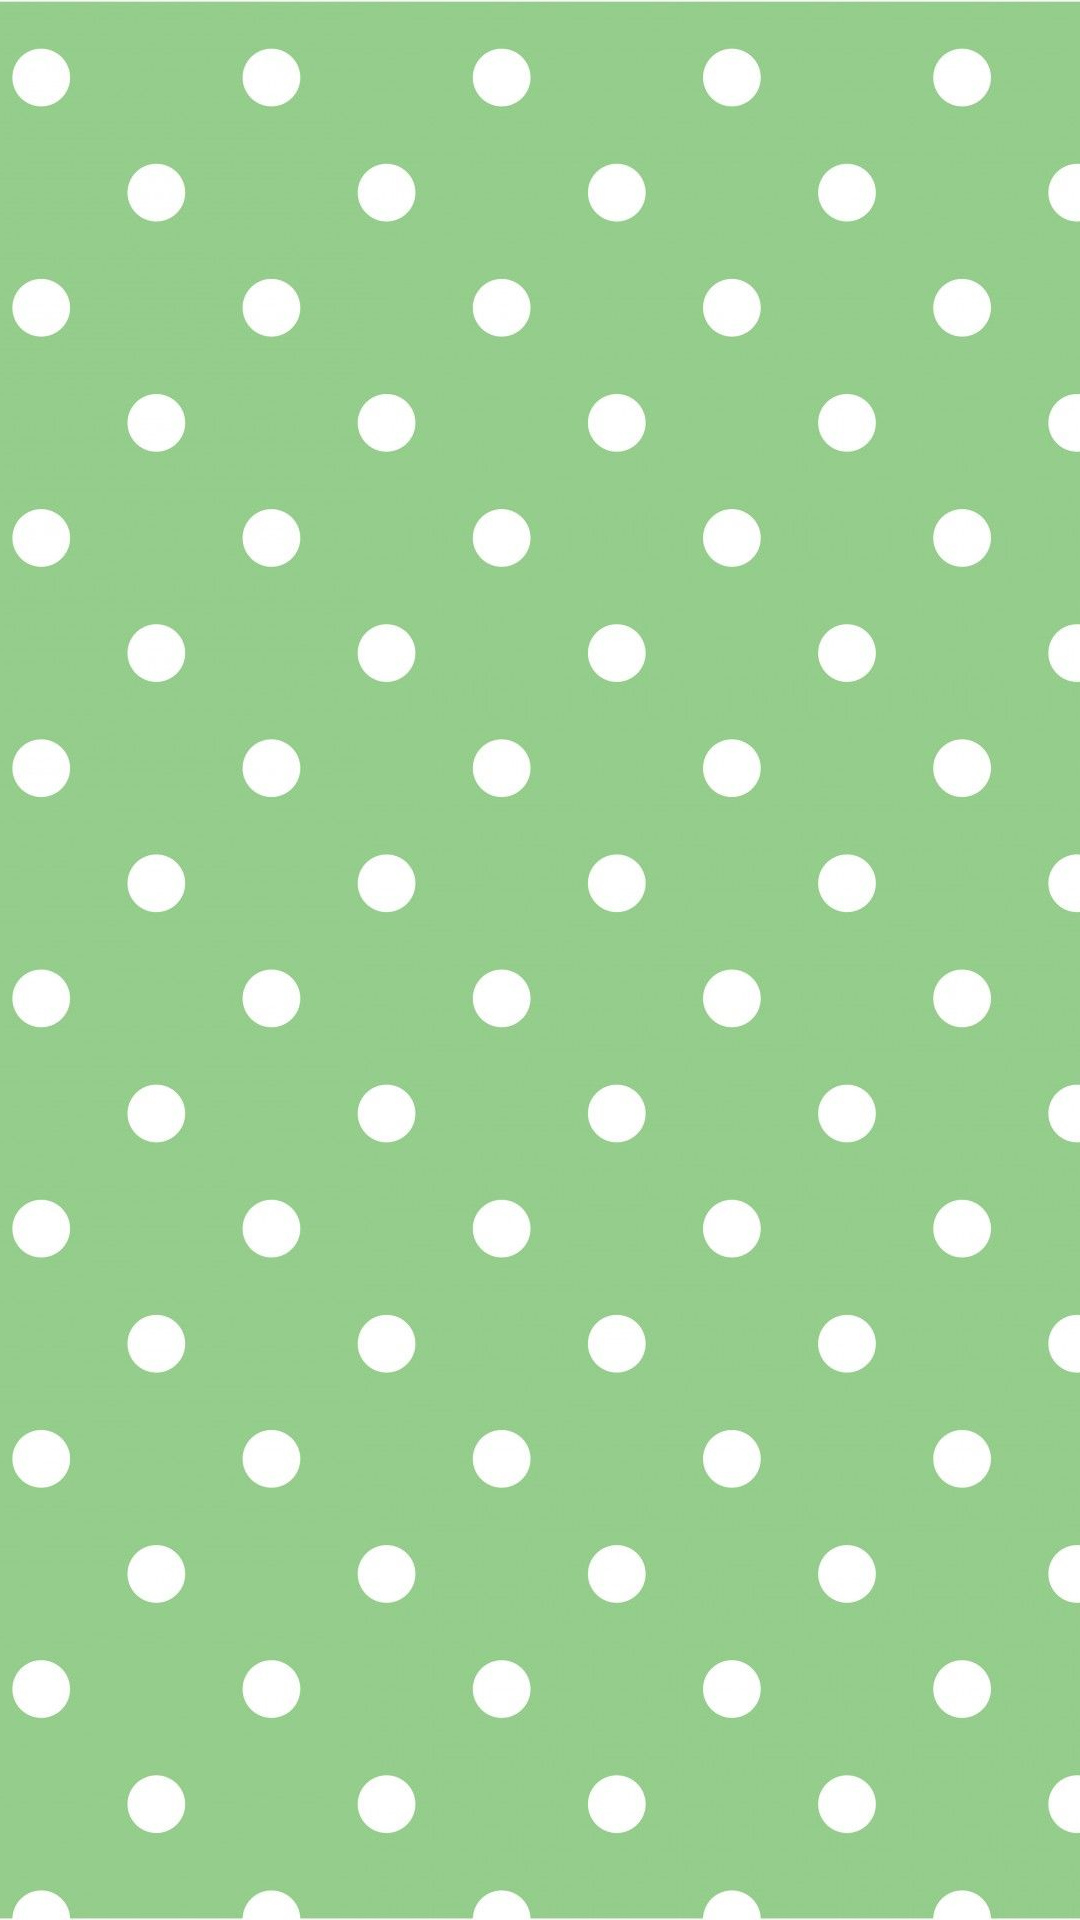 Polka Dot, Green color scheme, Natural and fresh, Modern style, 1080x1920 Full HD Handy